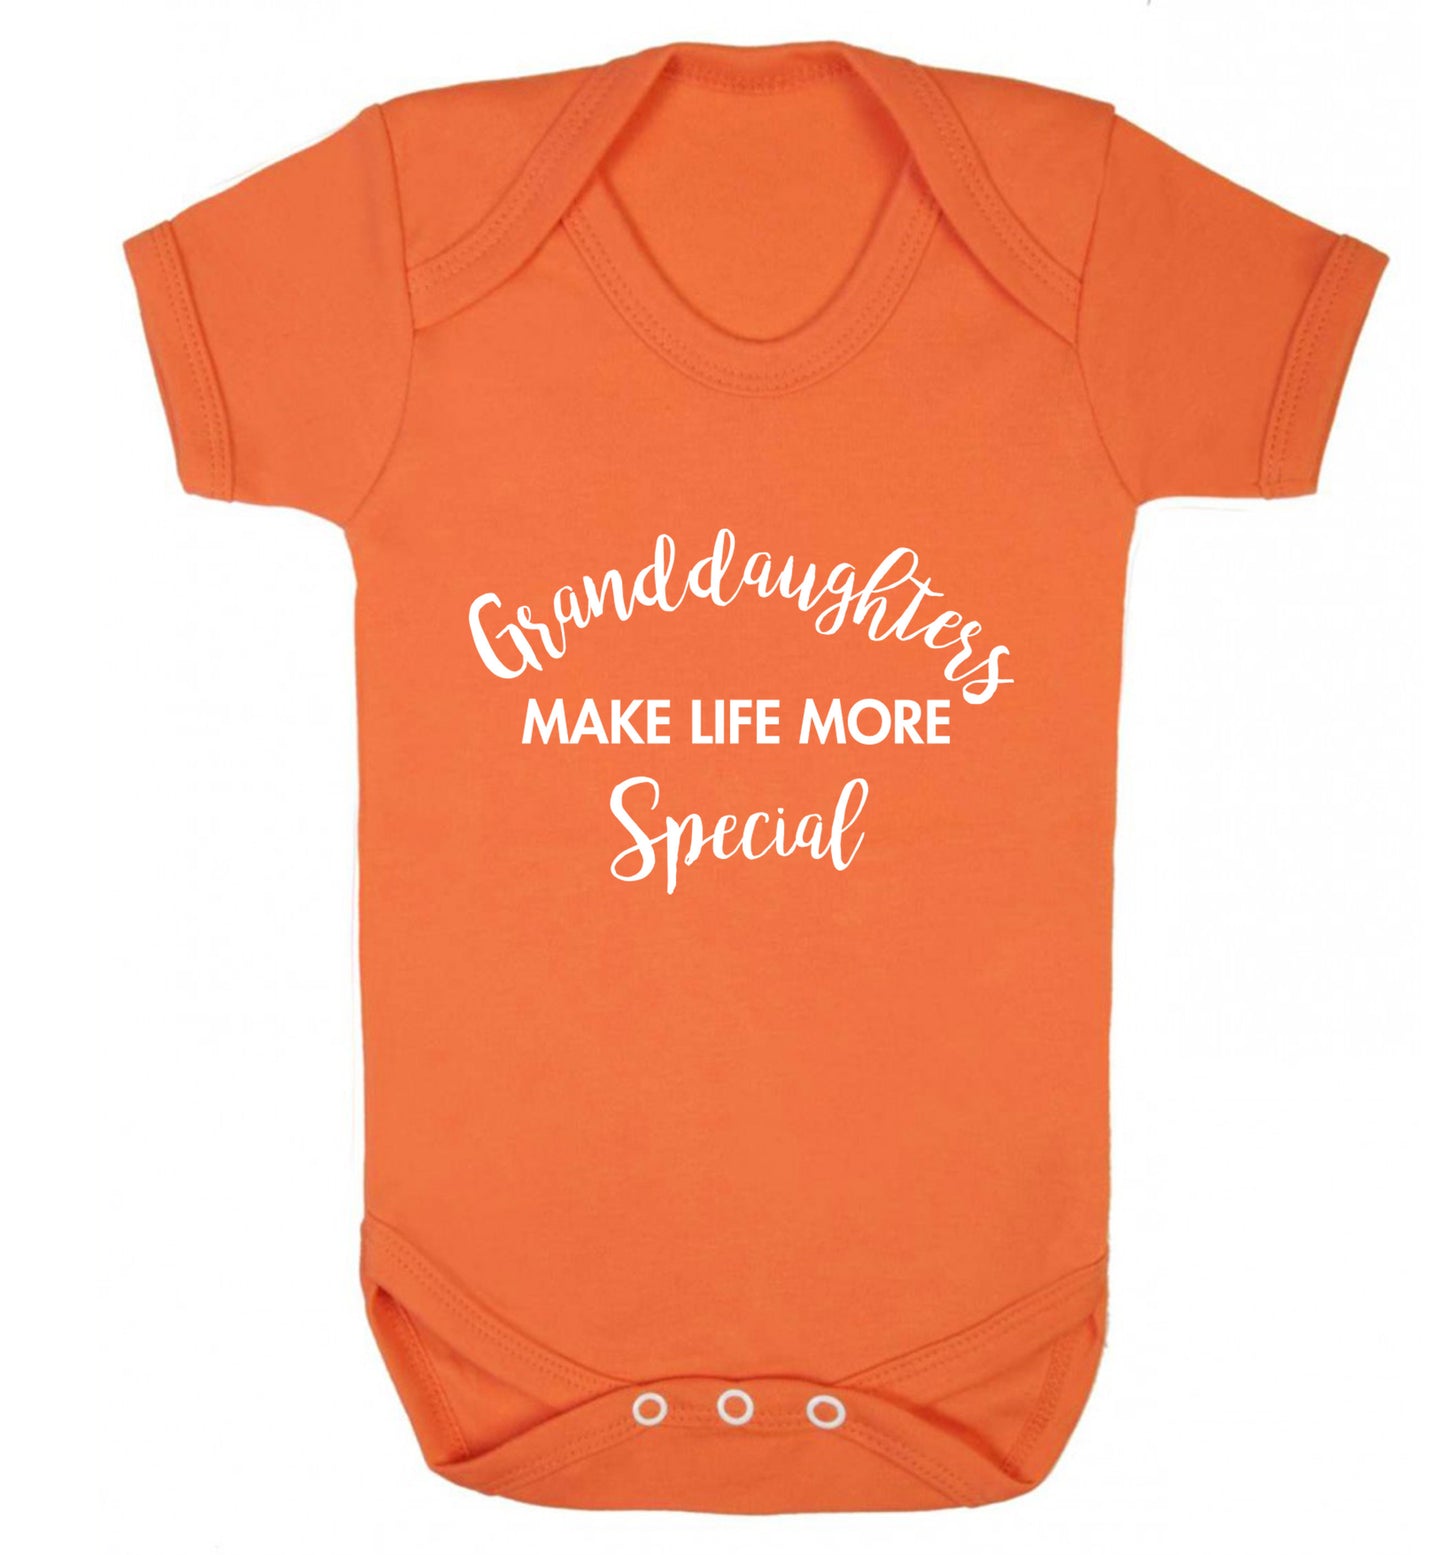 Granddaughters make life more special Baby Vest orange 18-24 months